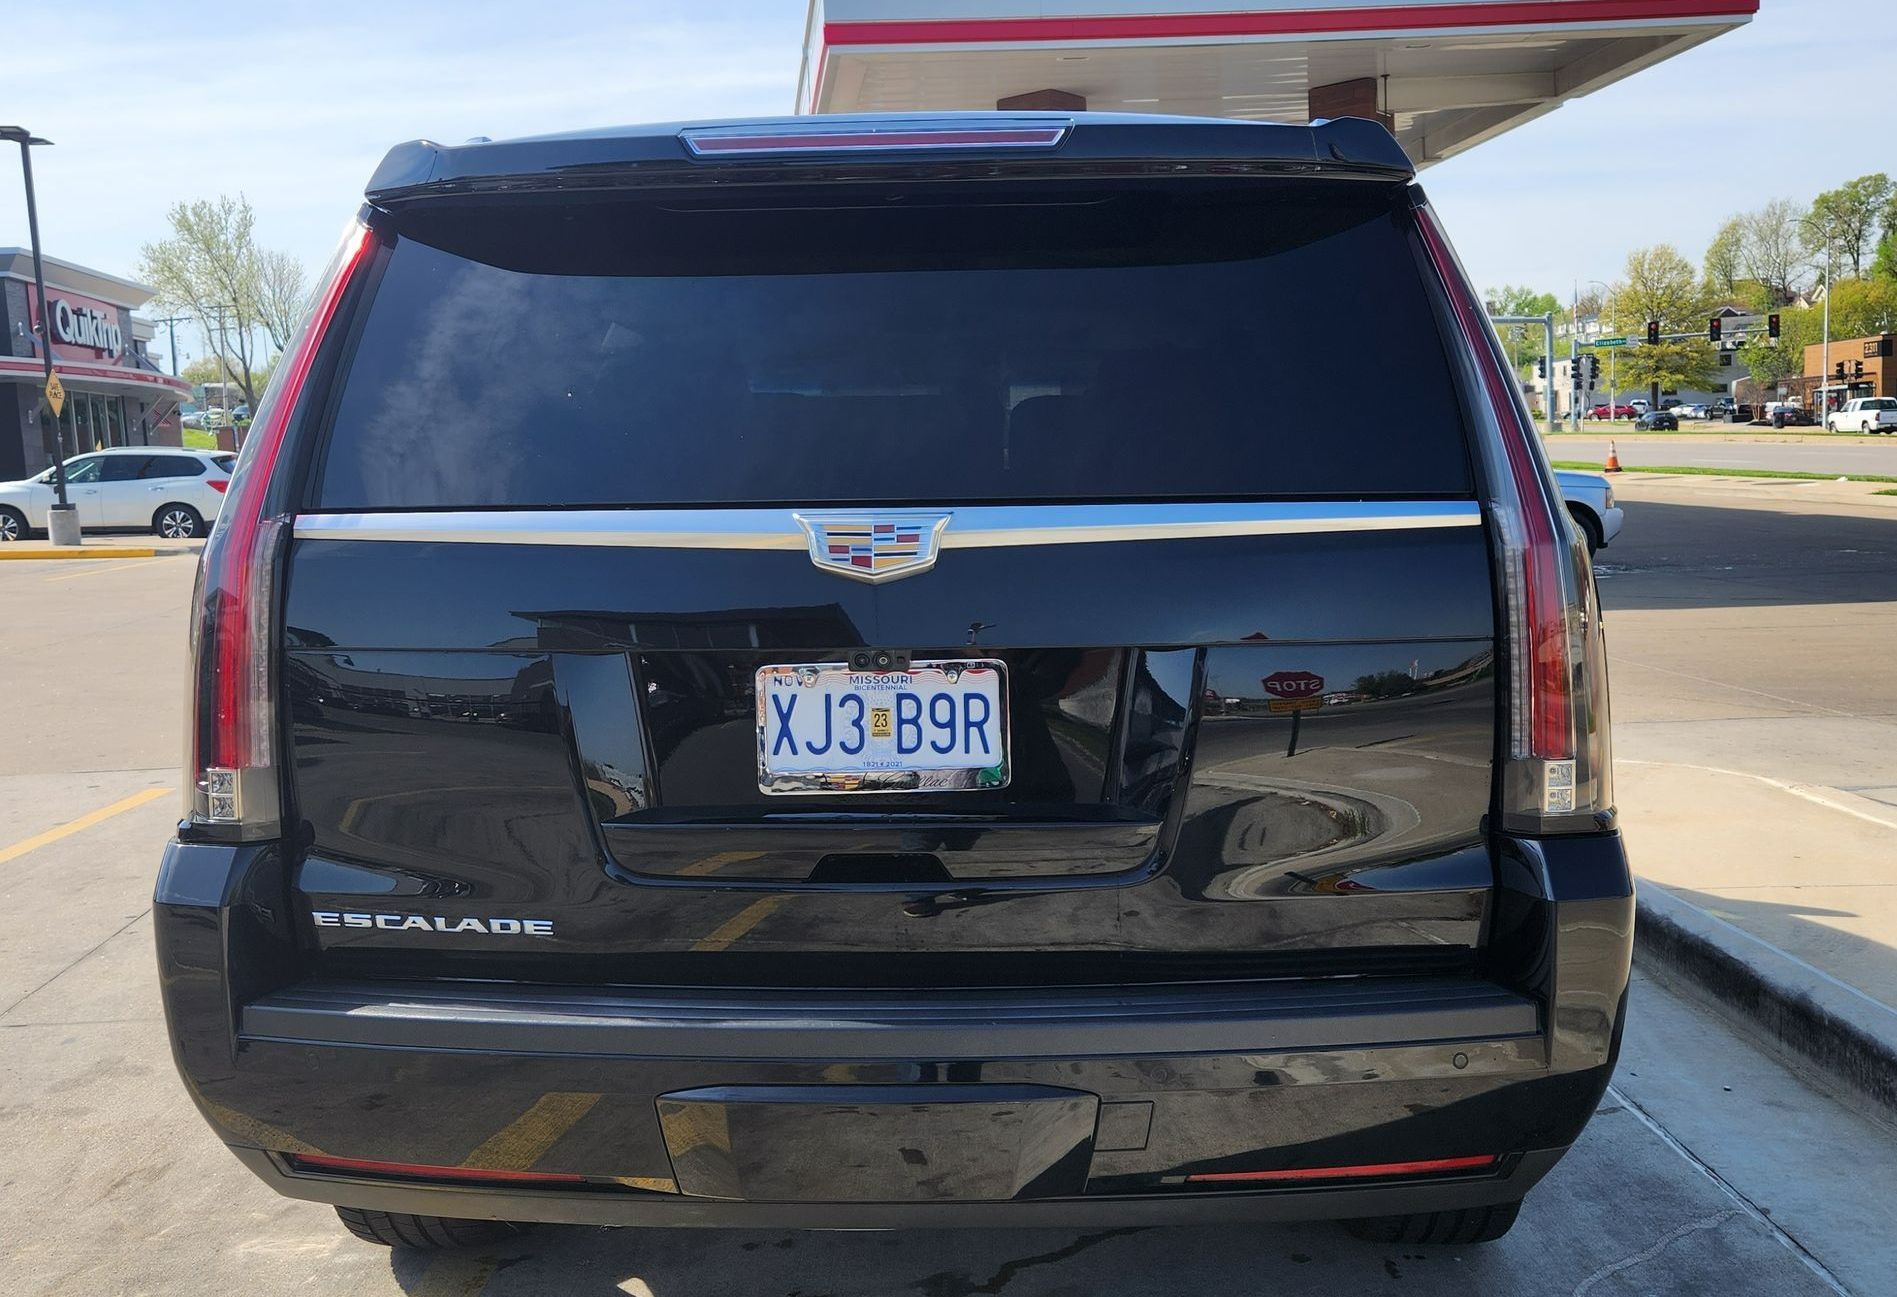 Concierges Black 2017 Escalade SUV exterior back view